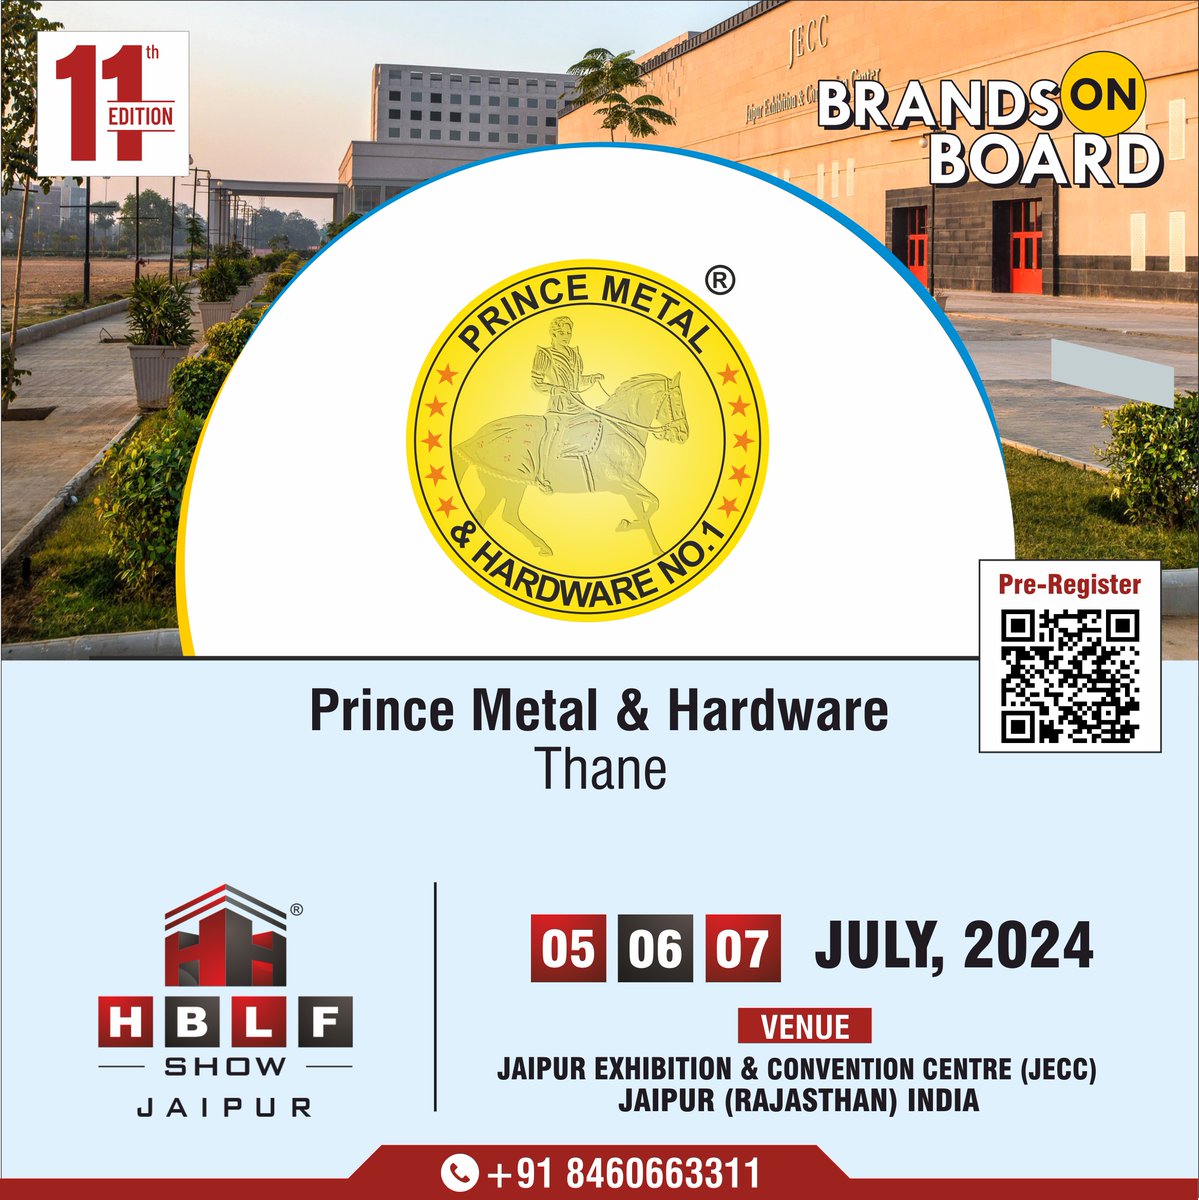 Prince Metal & Hardware: Join us at HBLF Show Jaipur, 05-06-07 July 2024 at JECC Rajasthan-See You There! #PrinceMetal #PrinceHardware #Thane #SSDoorFittings #ZulaFittings #GlassFittings #Sanitaryware #HardwareProducts #Manufacturer #HBLFShow #Jaipur #JECC #HBLFShow2024 #Hardware